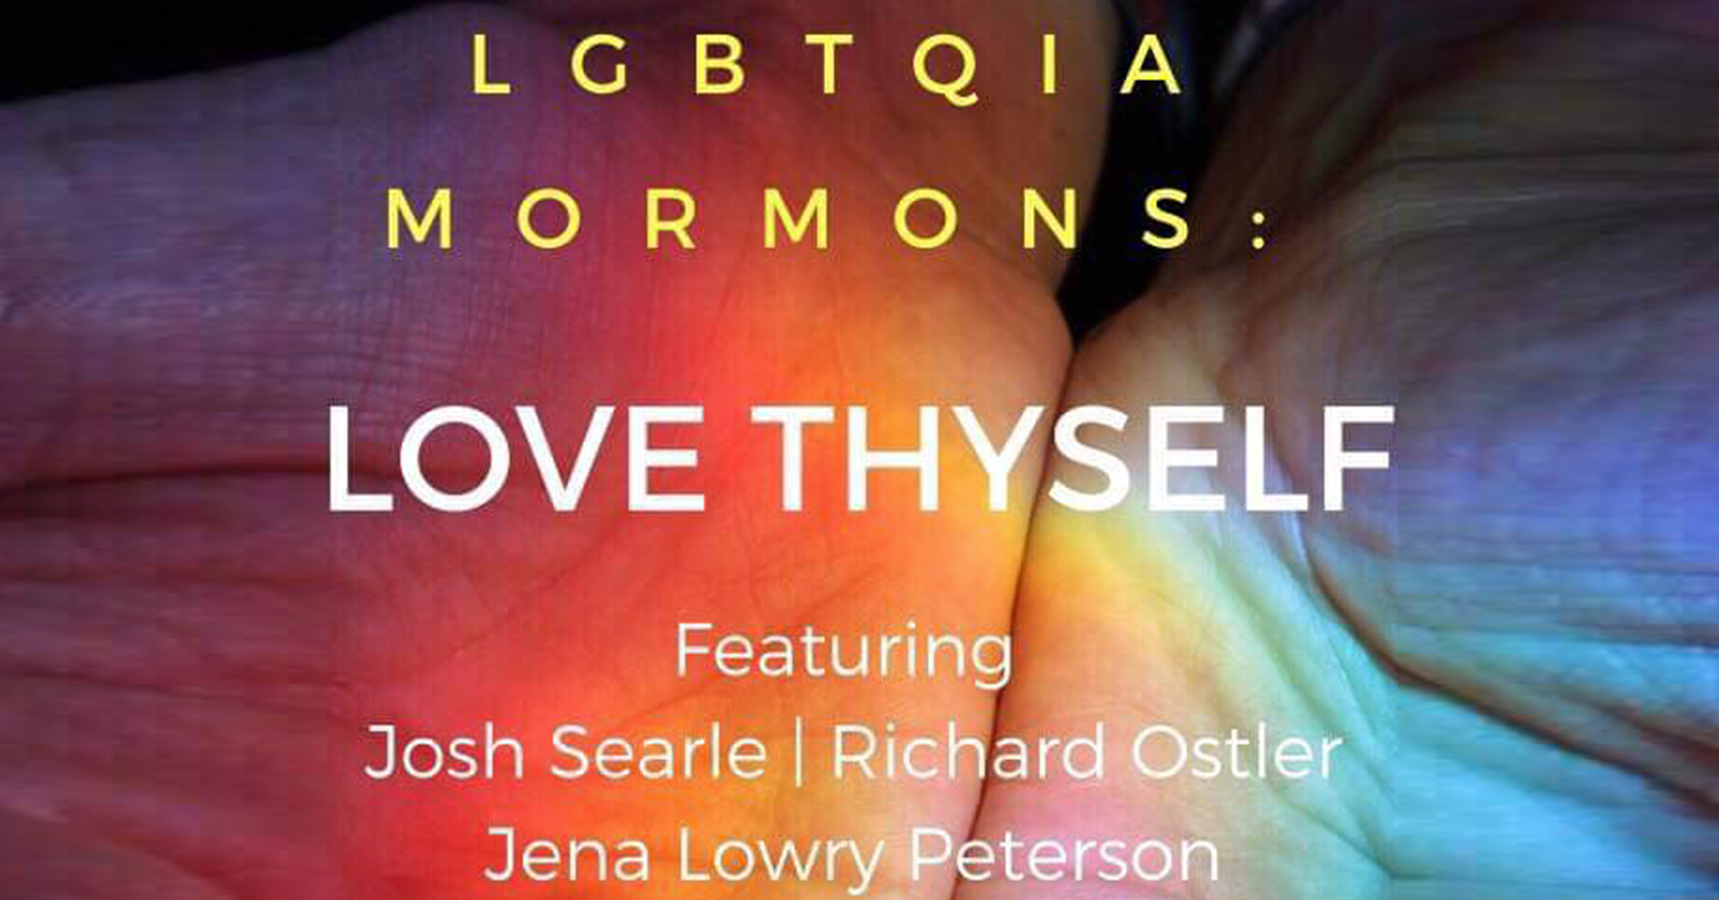 LGBTQIA Mormons Love Thyself 1719x900